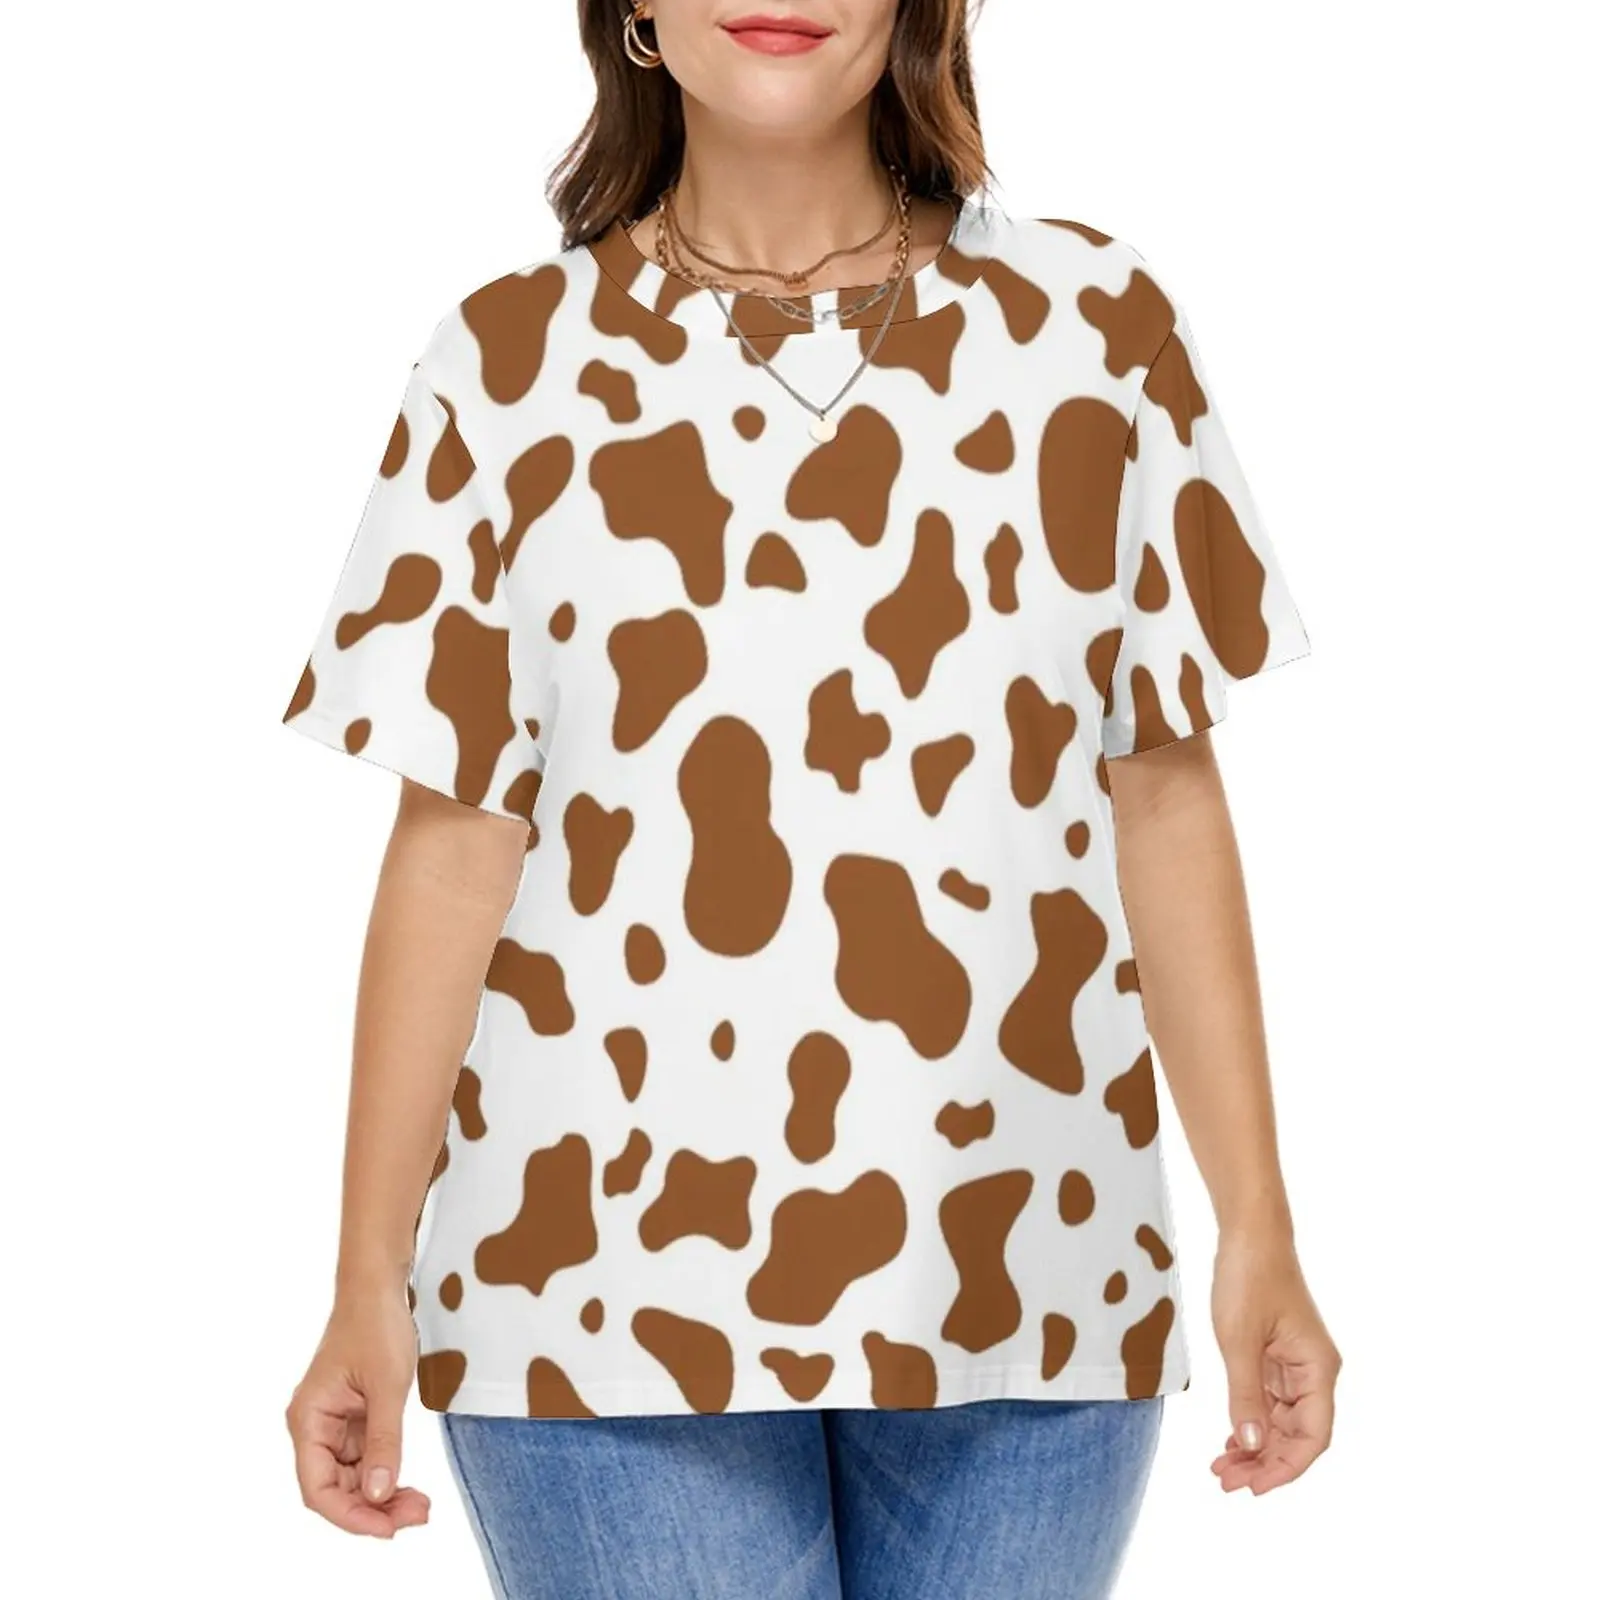 Brown Cow Print Pattern T-Shirt Aesthetic Mooo Animal T-Shirts Short-Sleeve Tshirt Women Streetwear Top Tees Plus Size 4XL 5XL